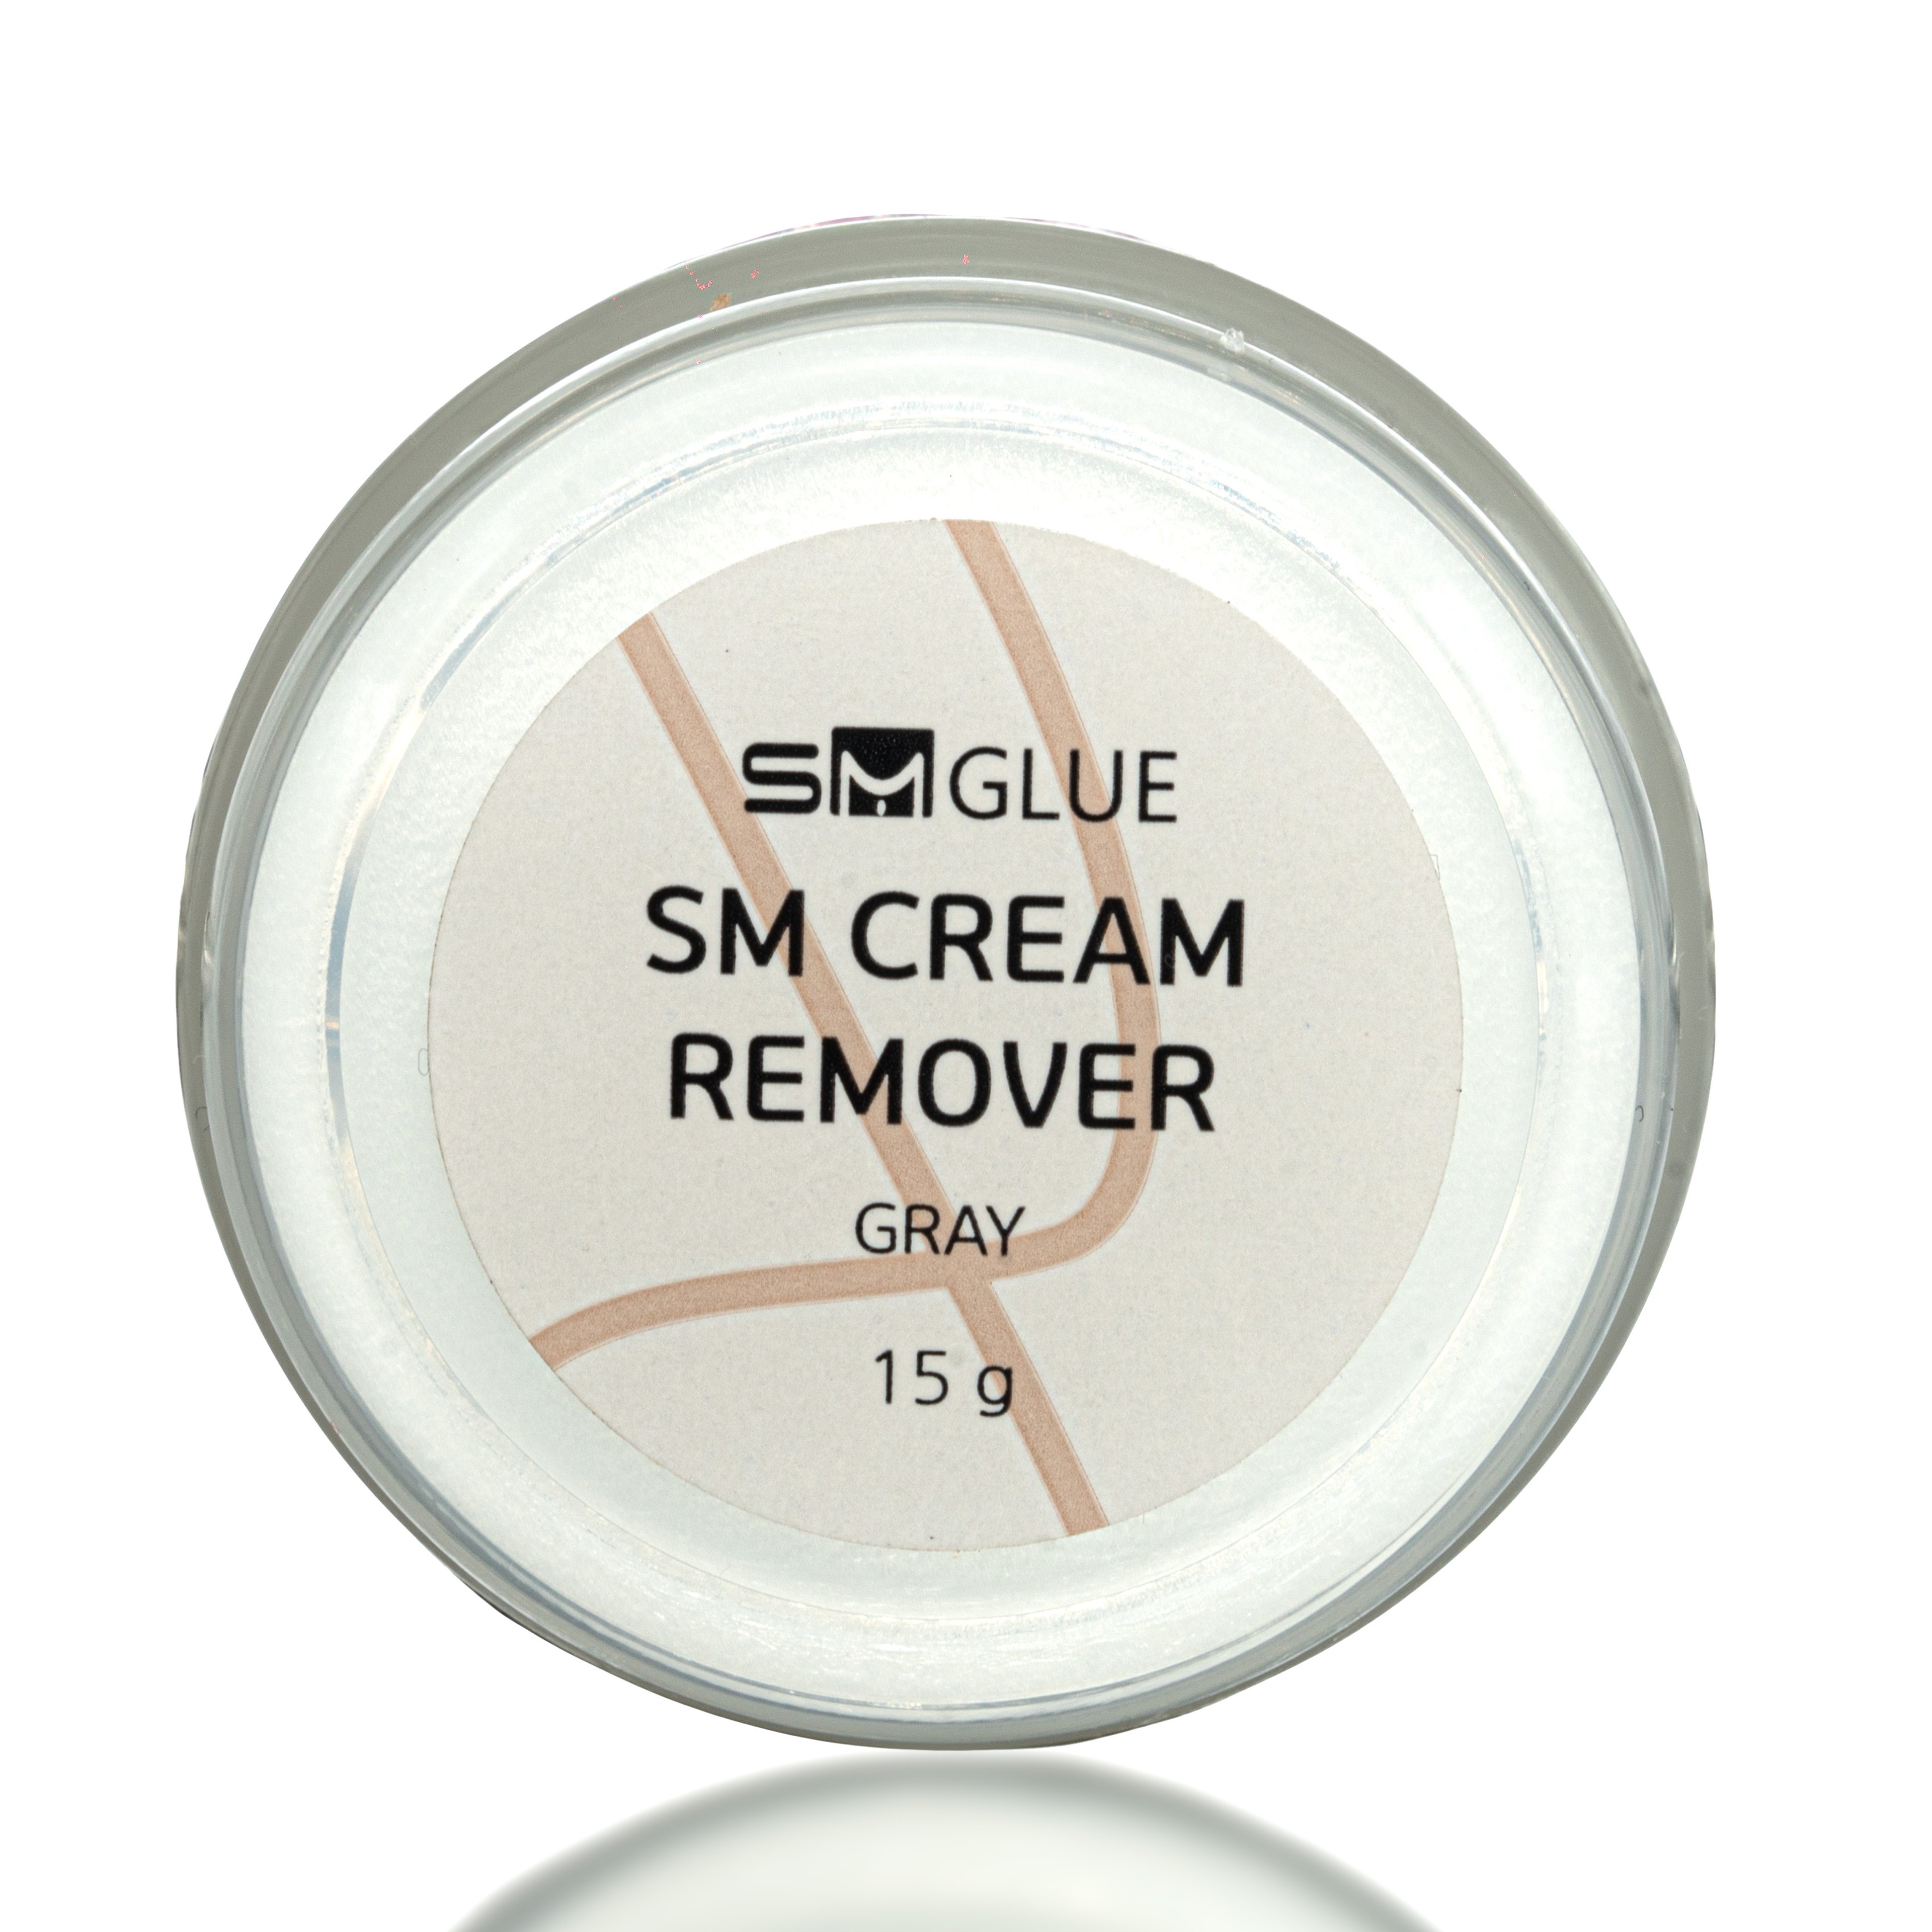 SM GLUE İpek Kirpik Çıkarıcı Remover Krem Tipi 15 gr